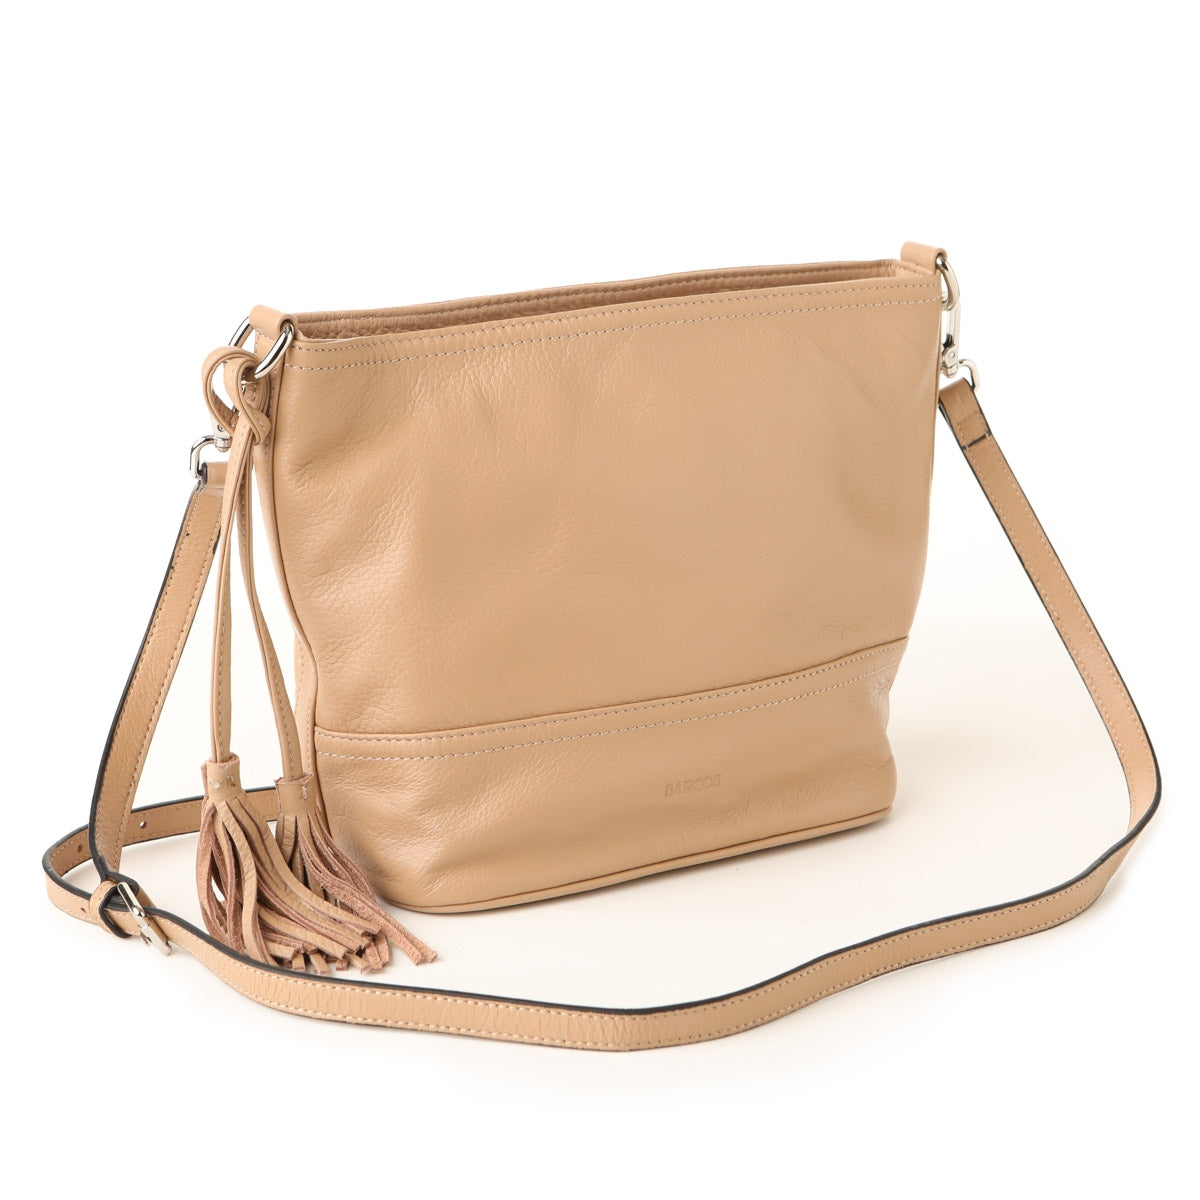 Shrink Leather 2 Way Handbag with Charm